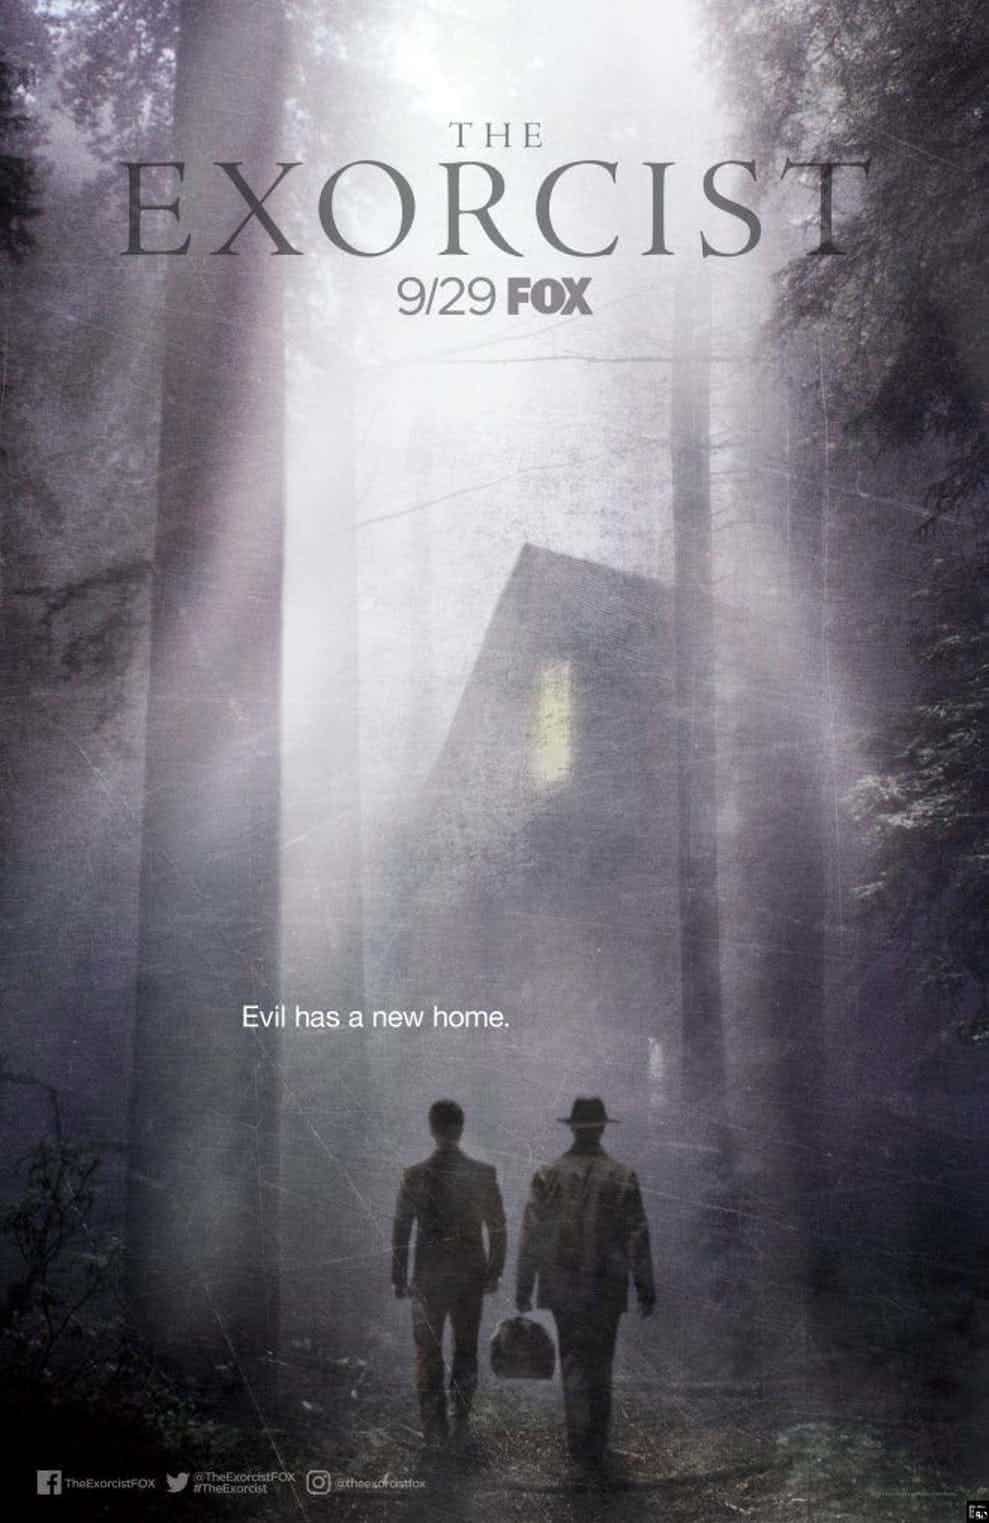 The Exorcist season 2 poster